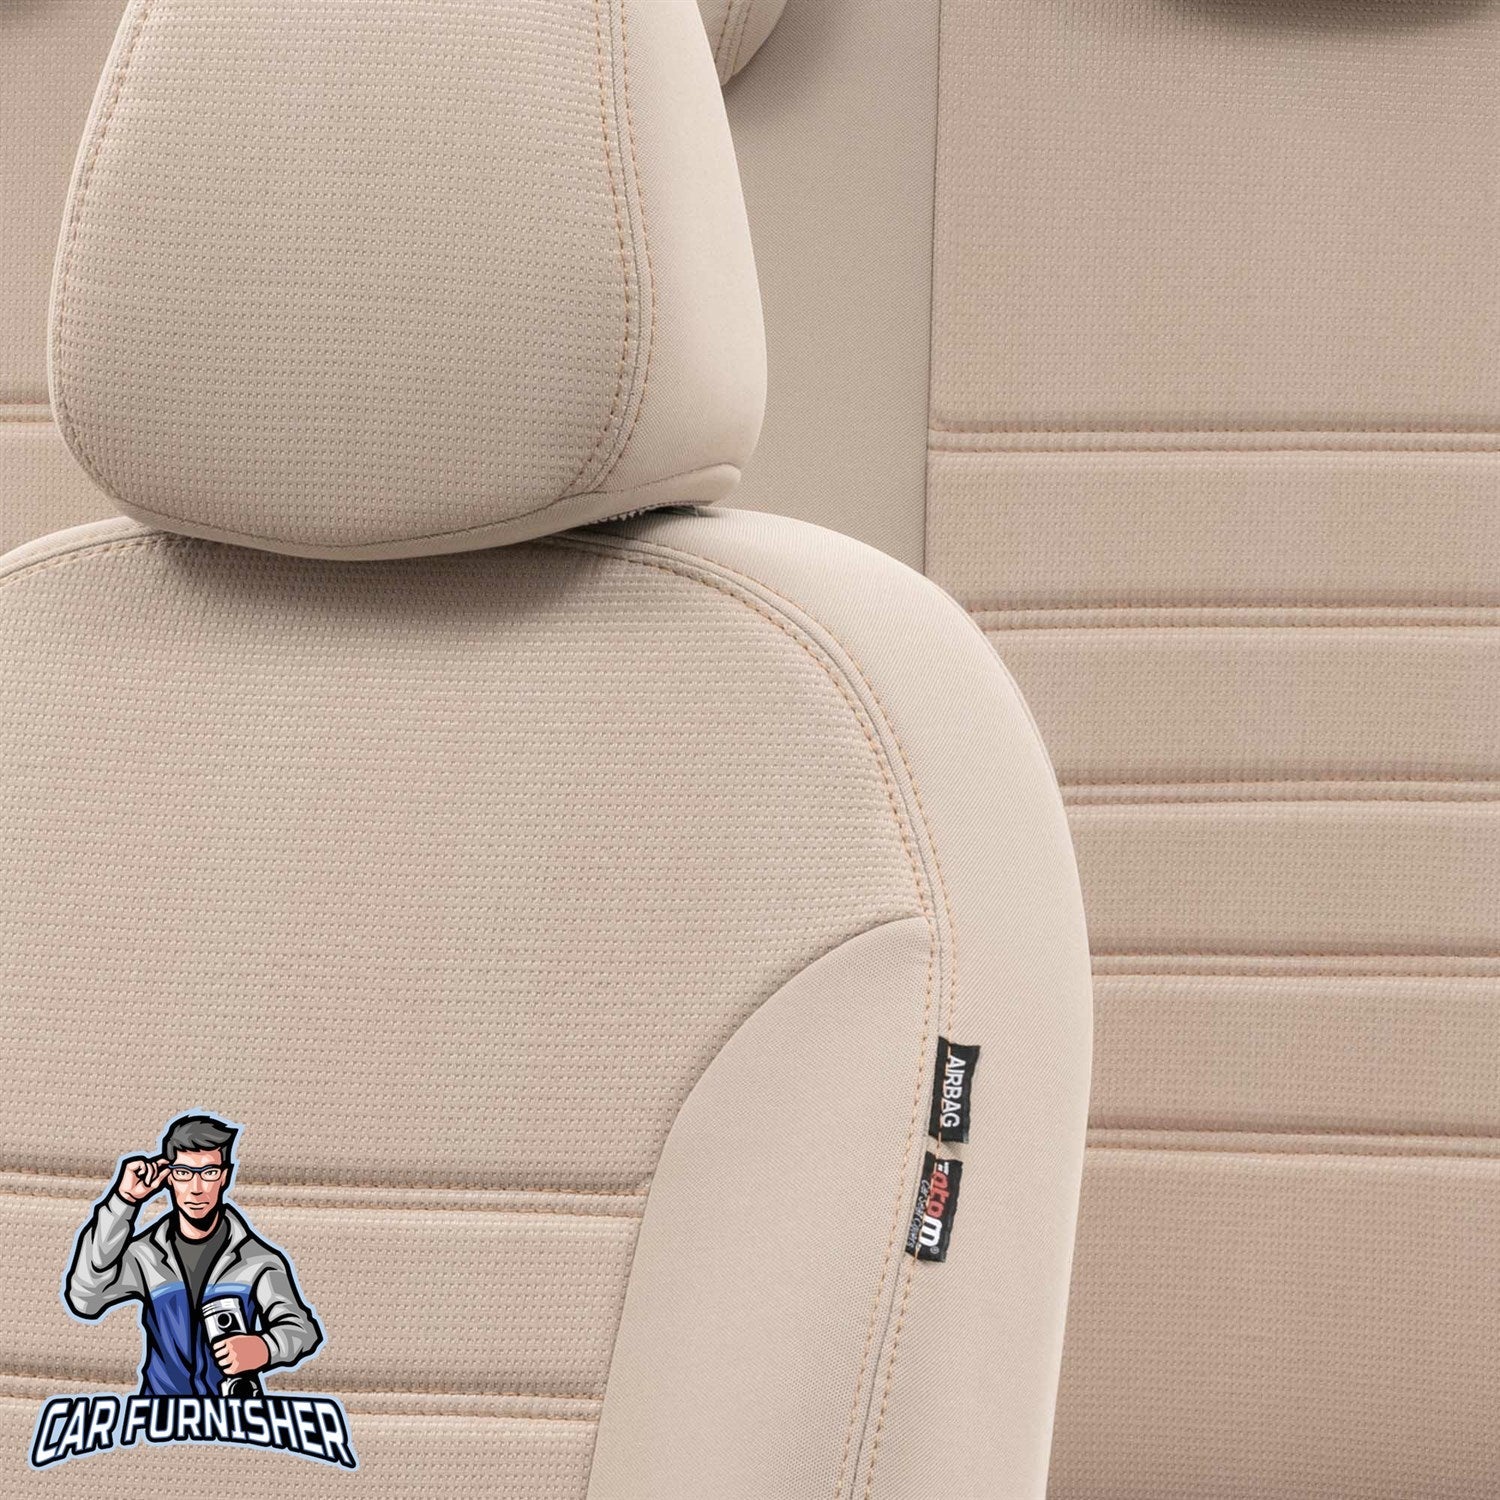 Volkswagen Transporter Seat Cover Original Jacquard Design Beige Jacquard Fabric